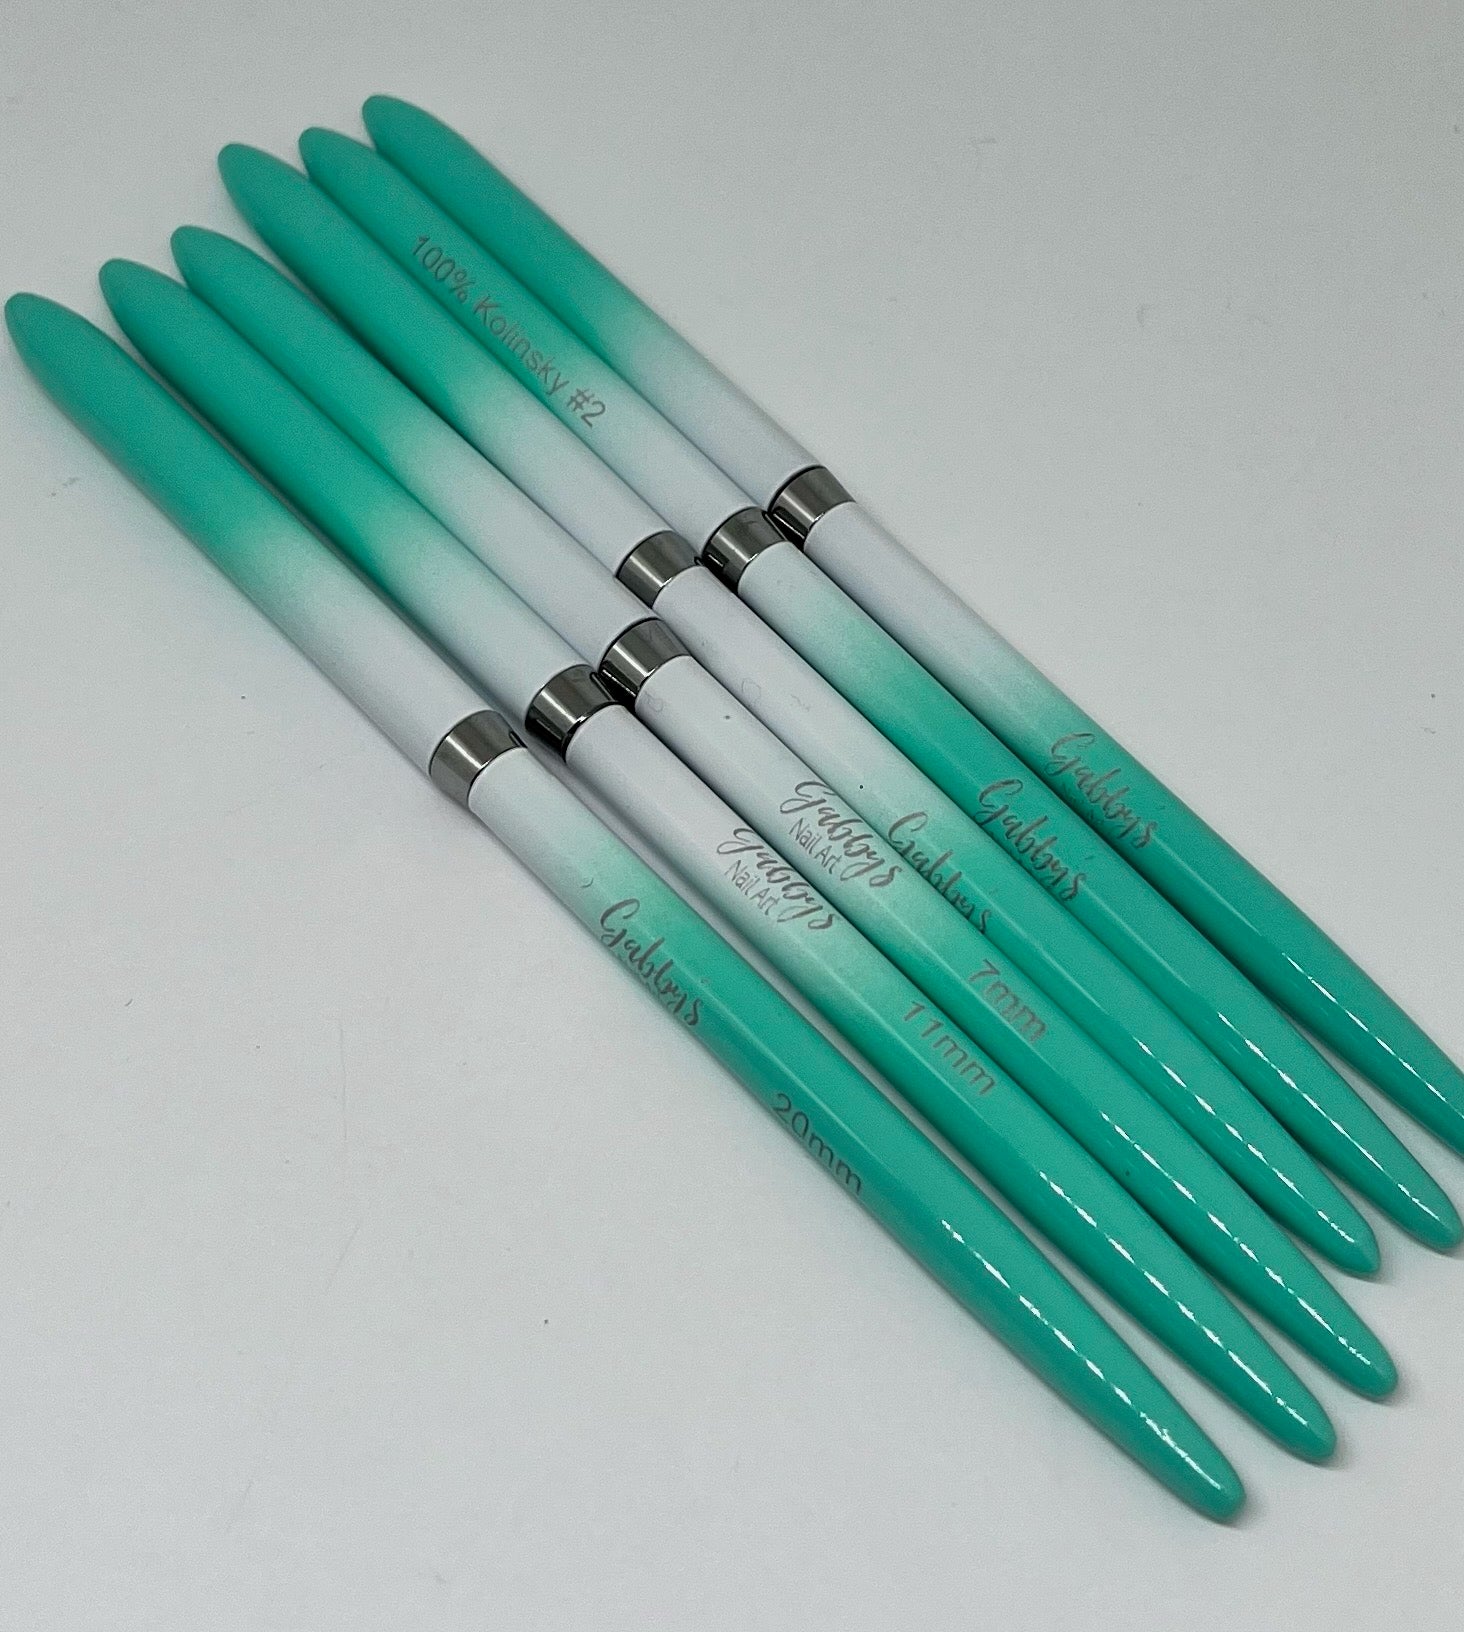 Mitty Nail Brush Salon Series - 9mm nail art brush